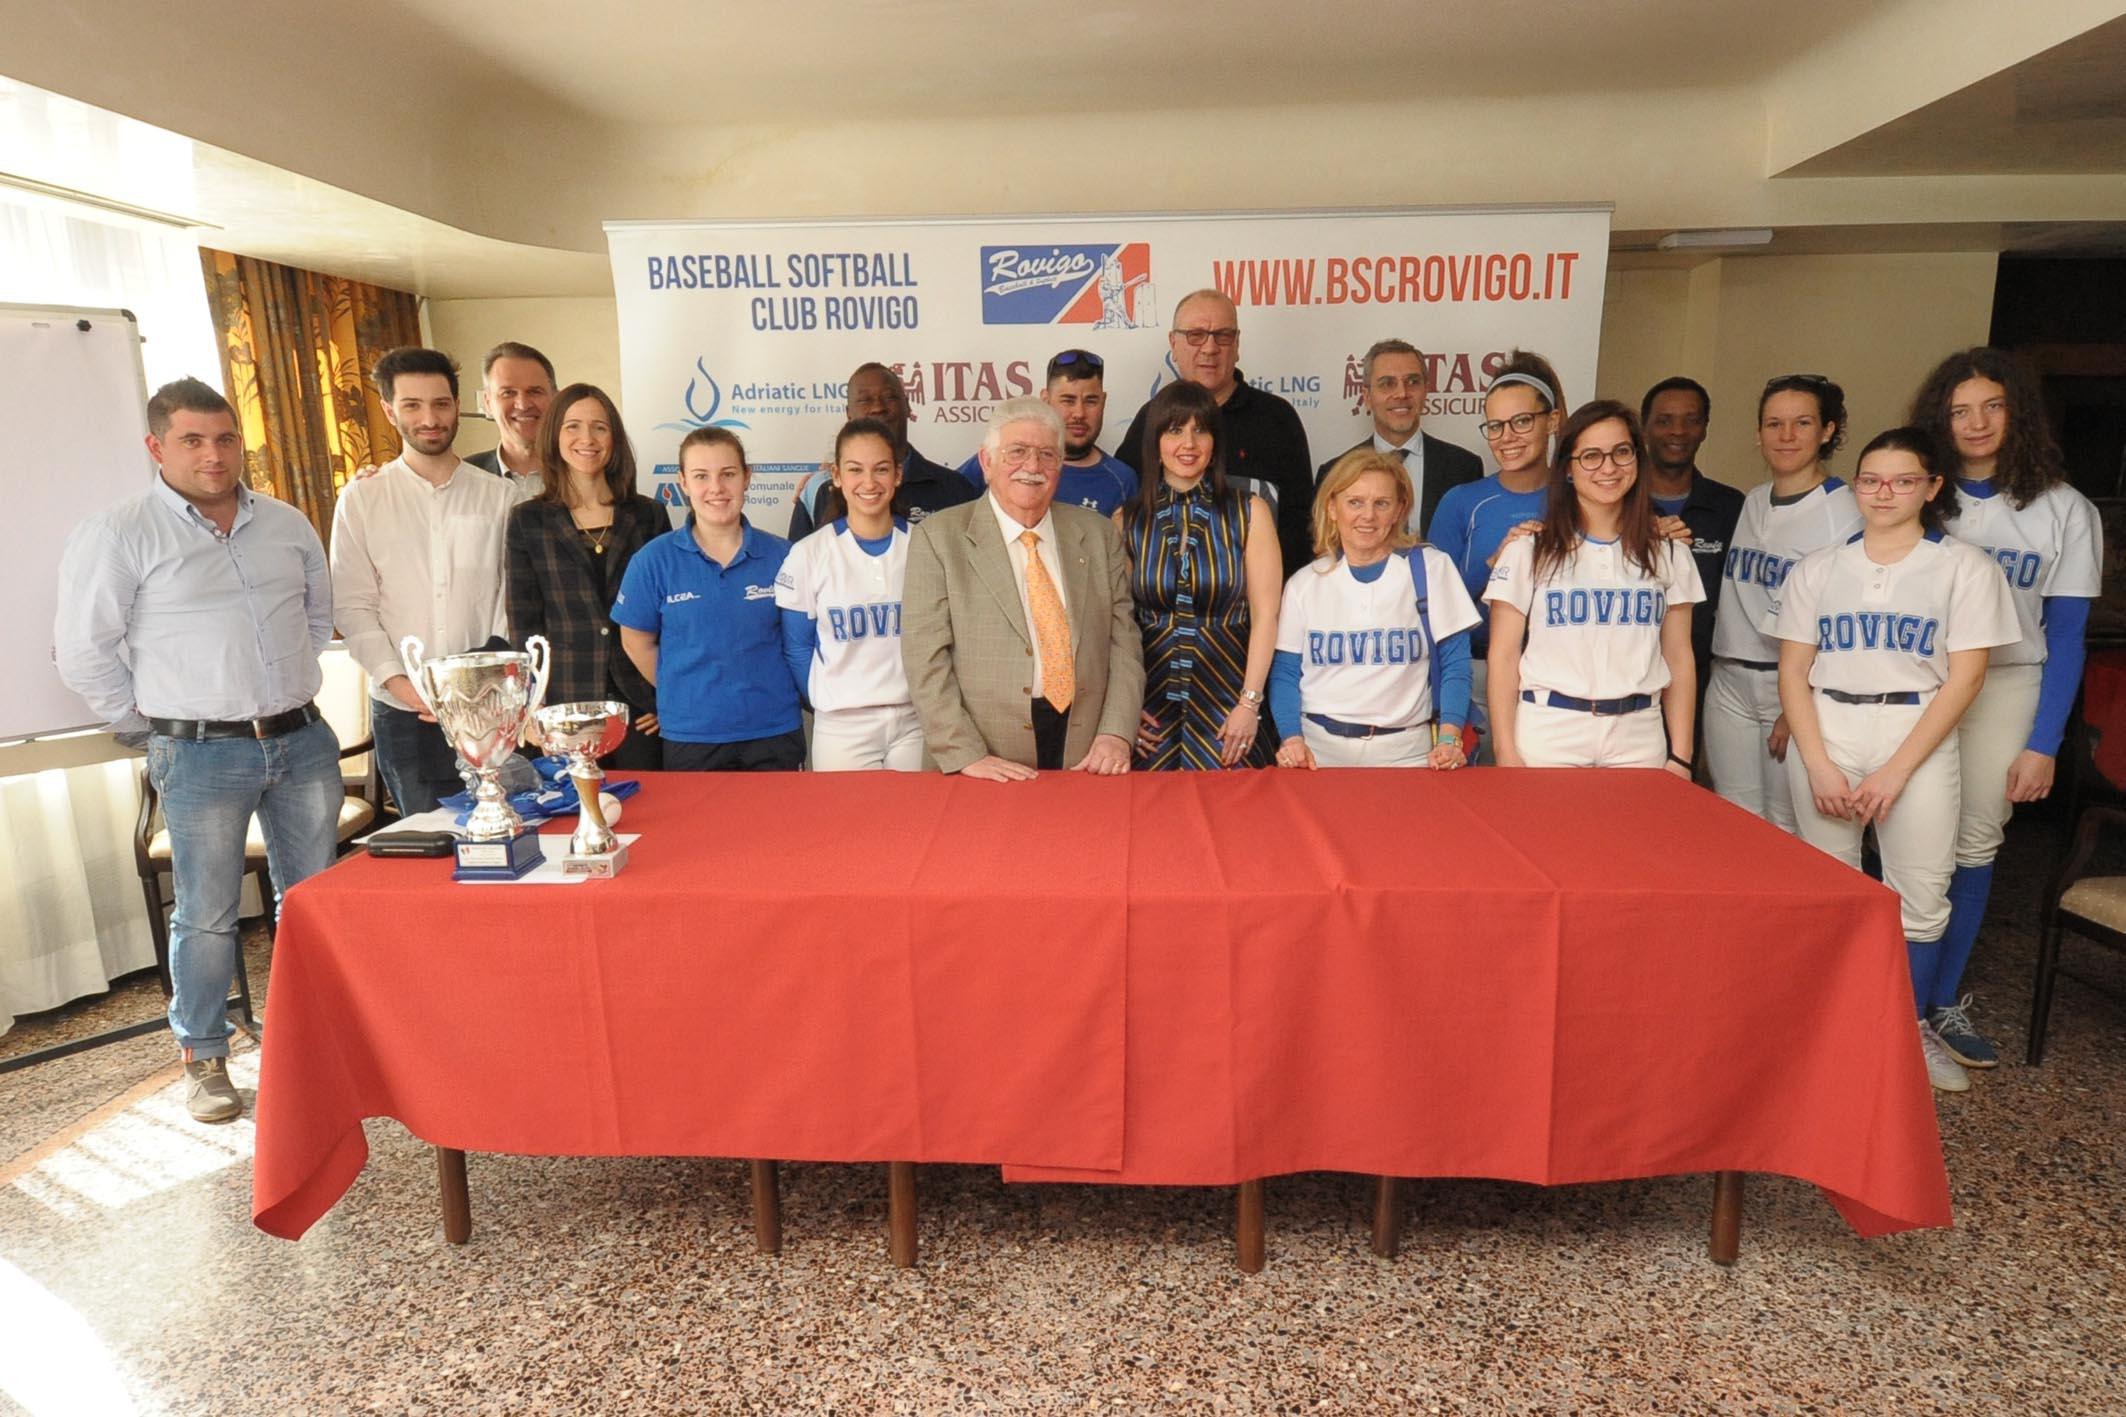 Rovigo’s Baseball Softball Club: the 2017 season is starting